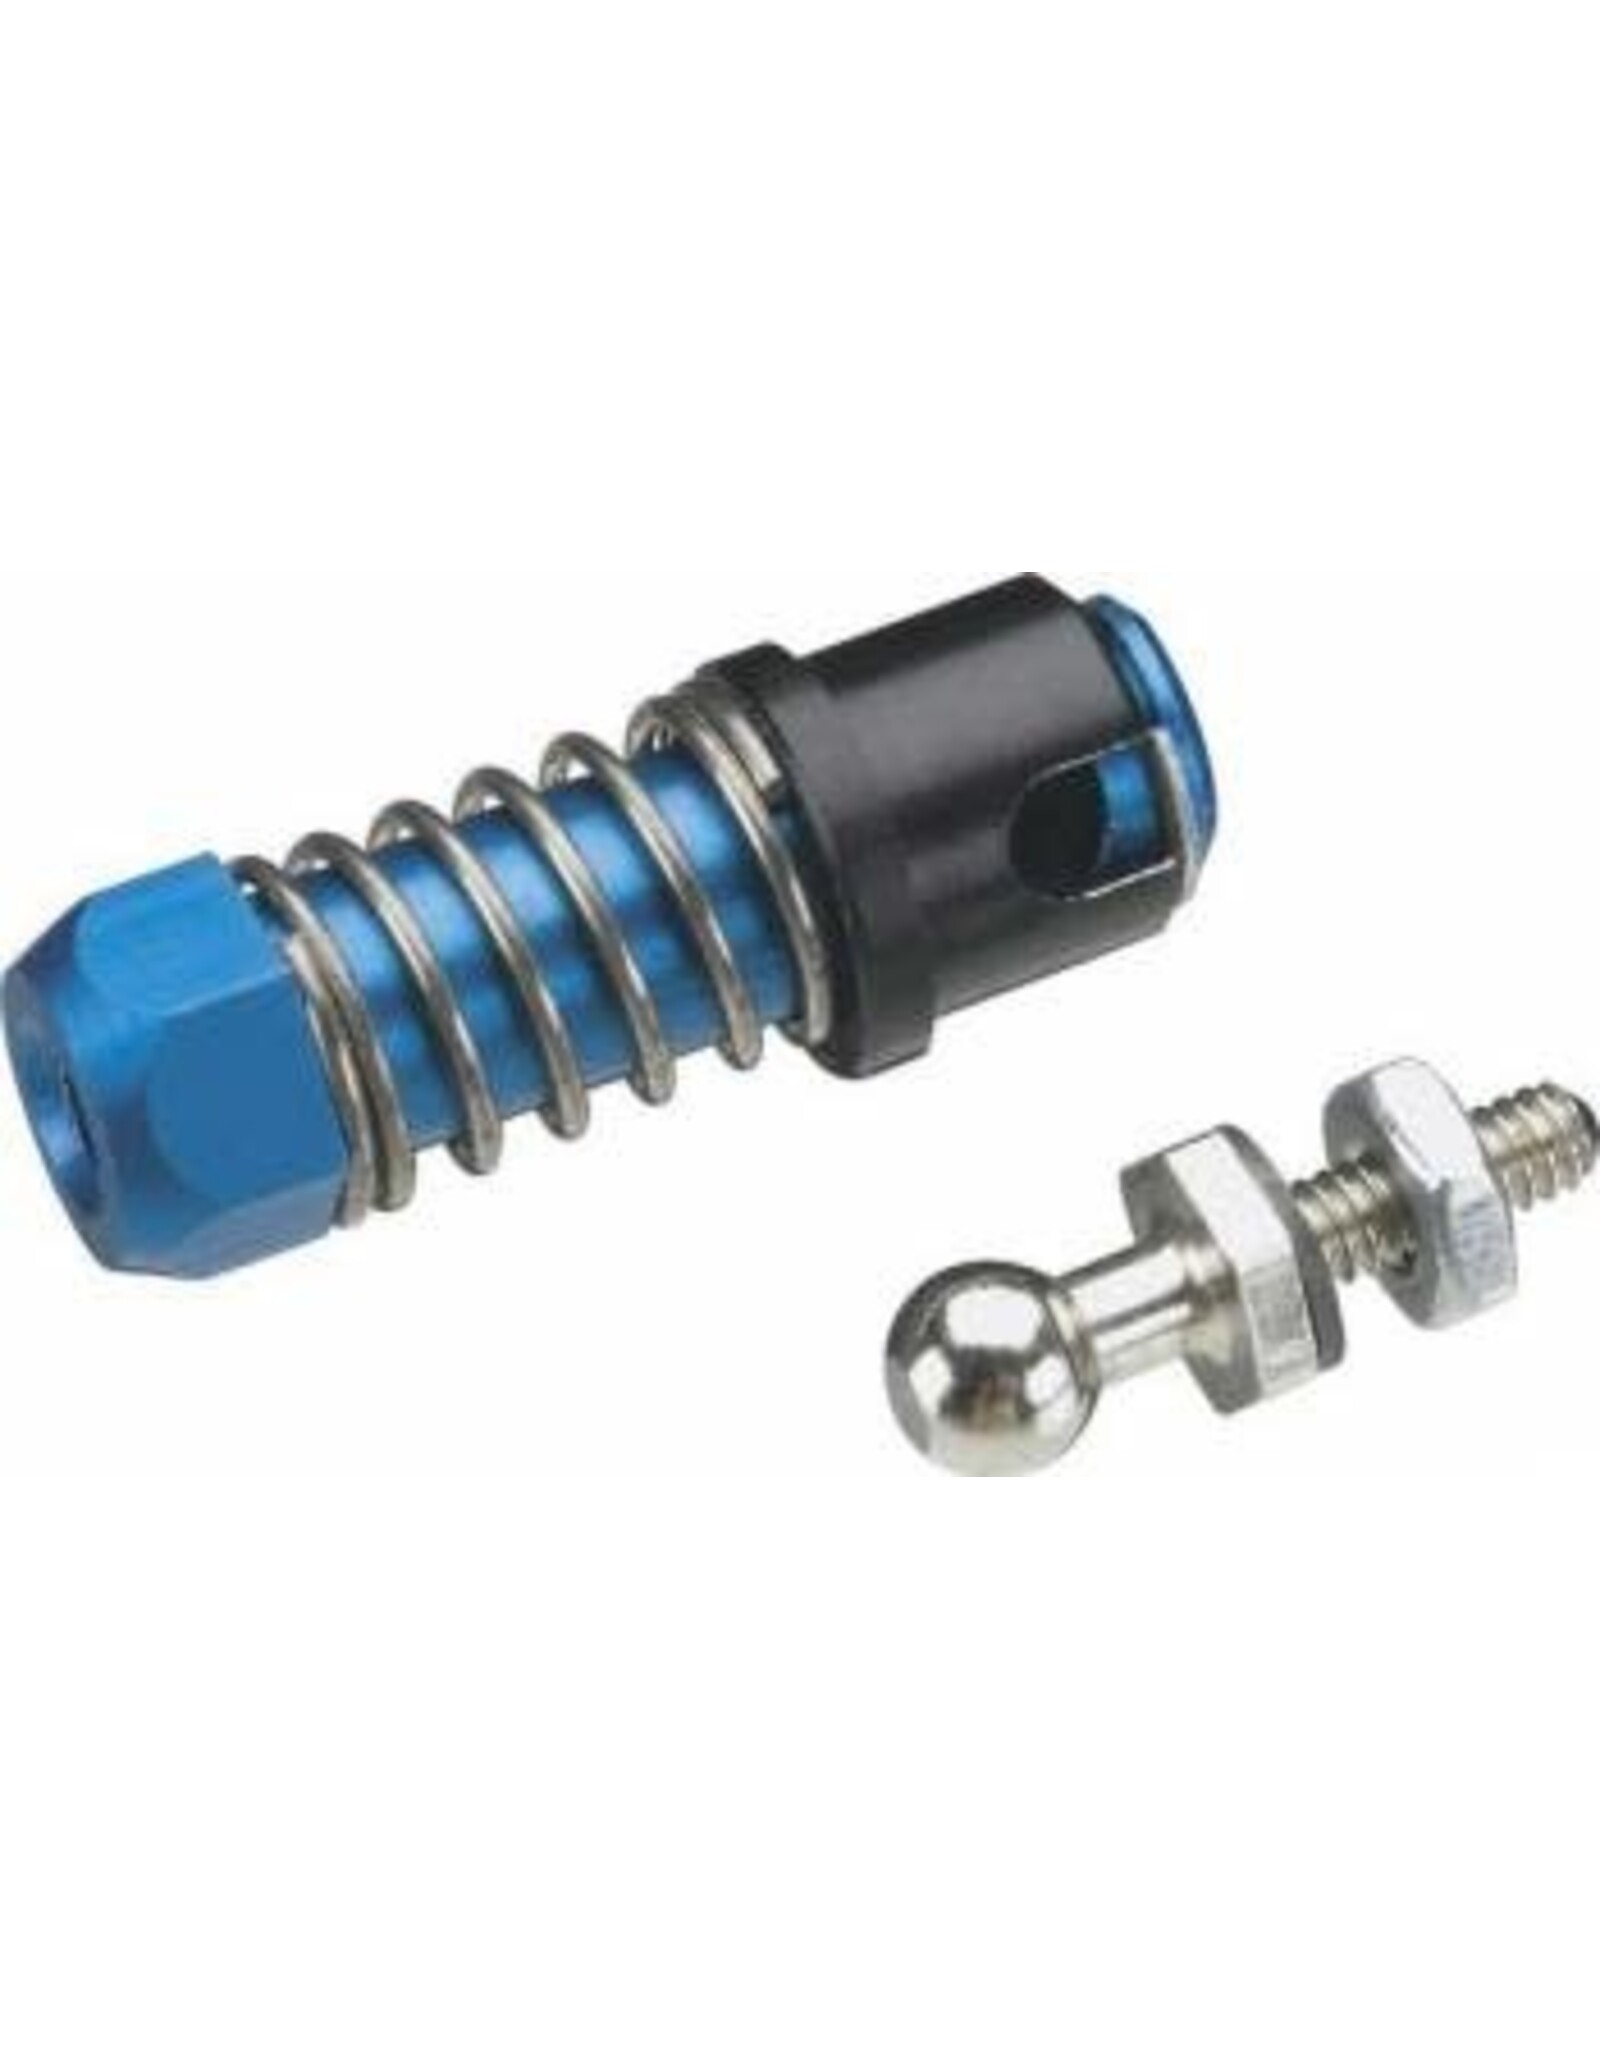 Sullivan Products 4-40 Aluminum ball connector w locking sleeve